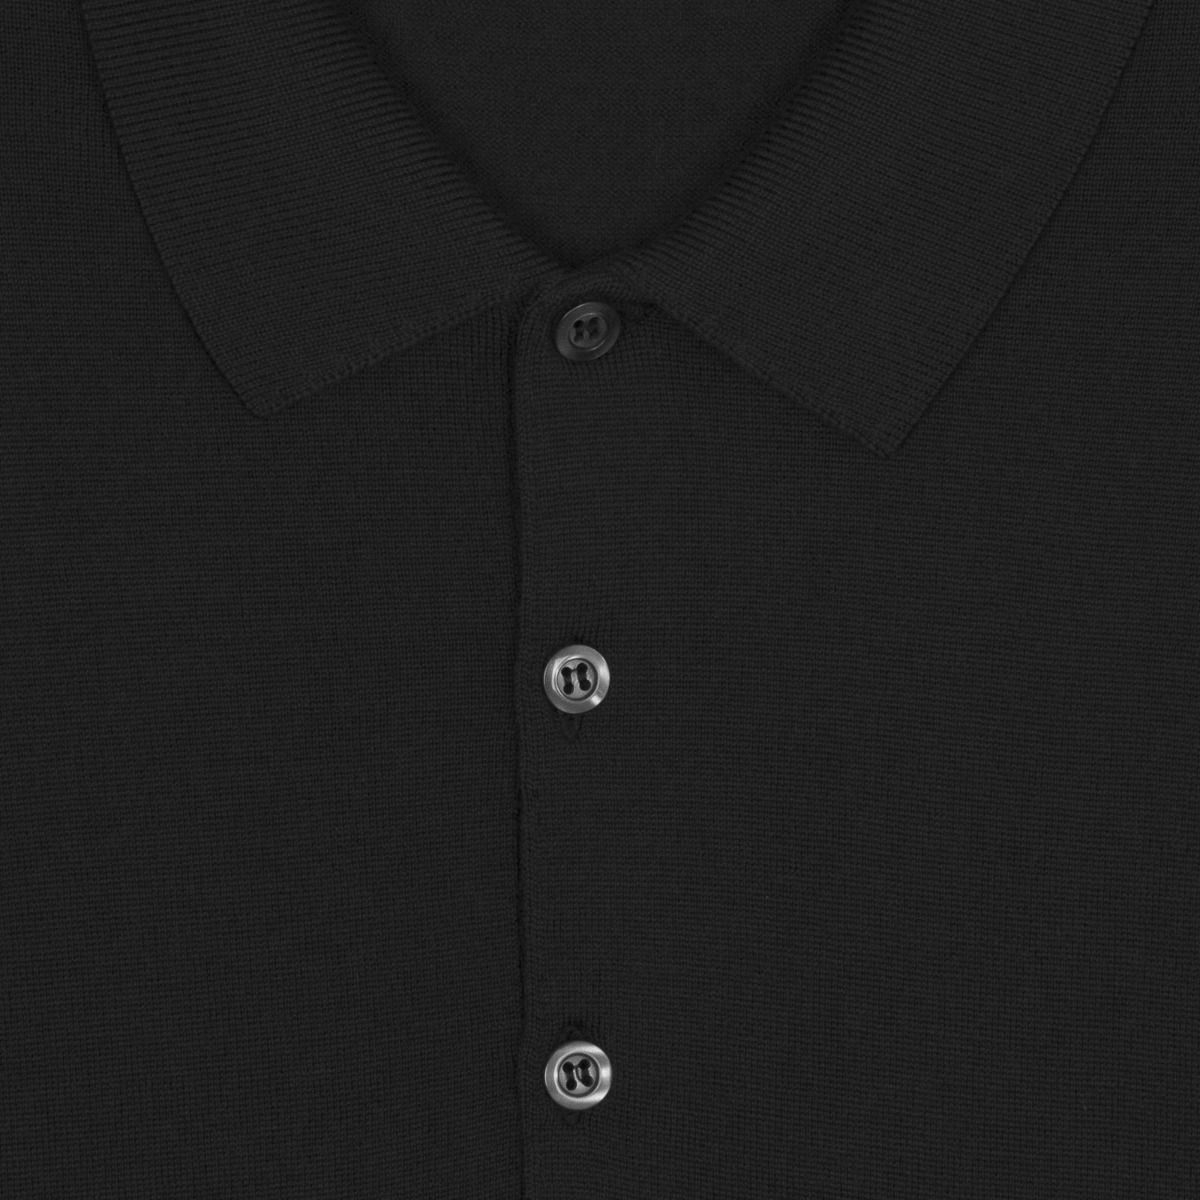 Belper Black Long Sleeve Polo Shirt